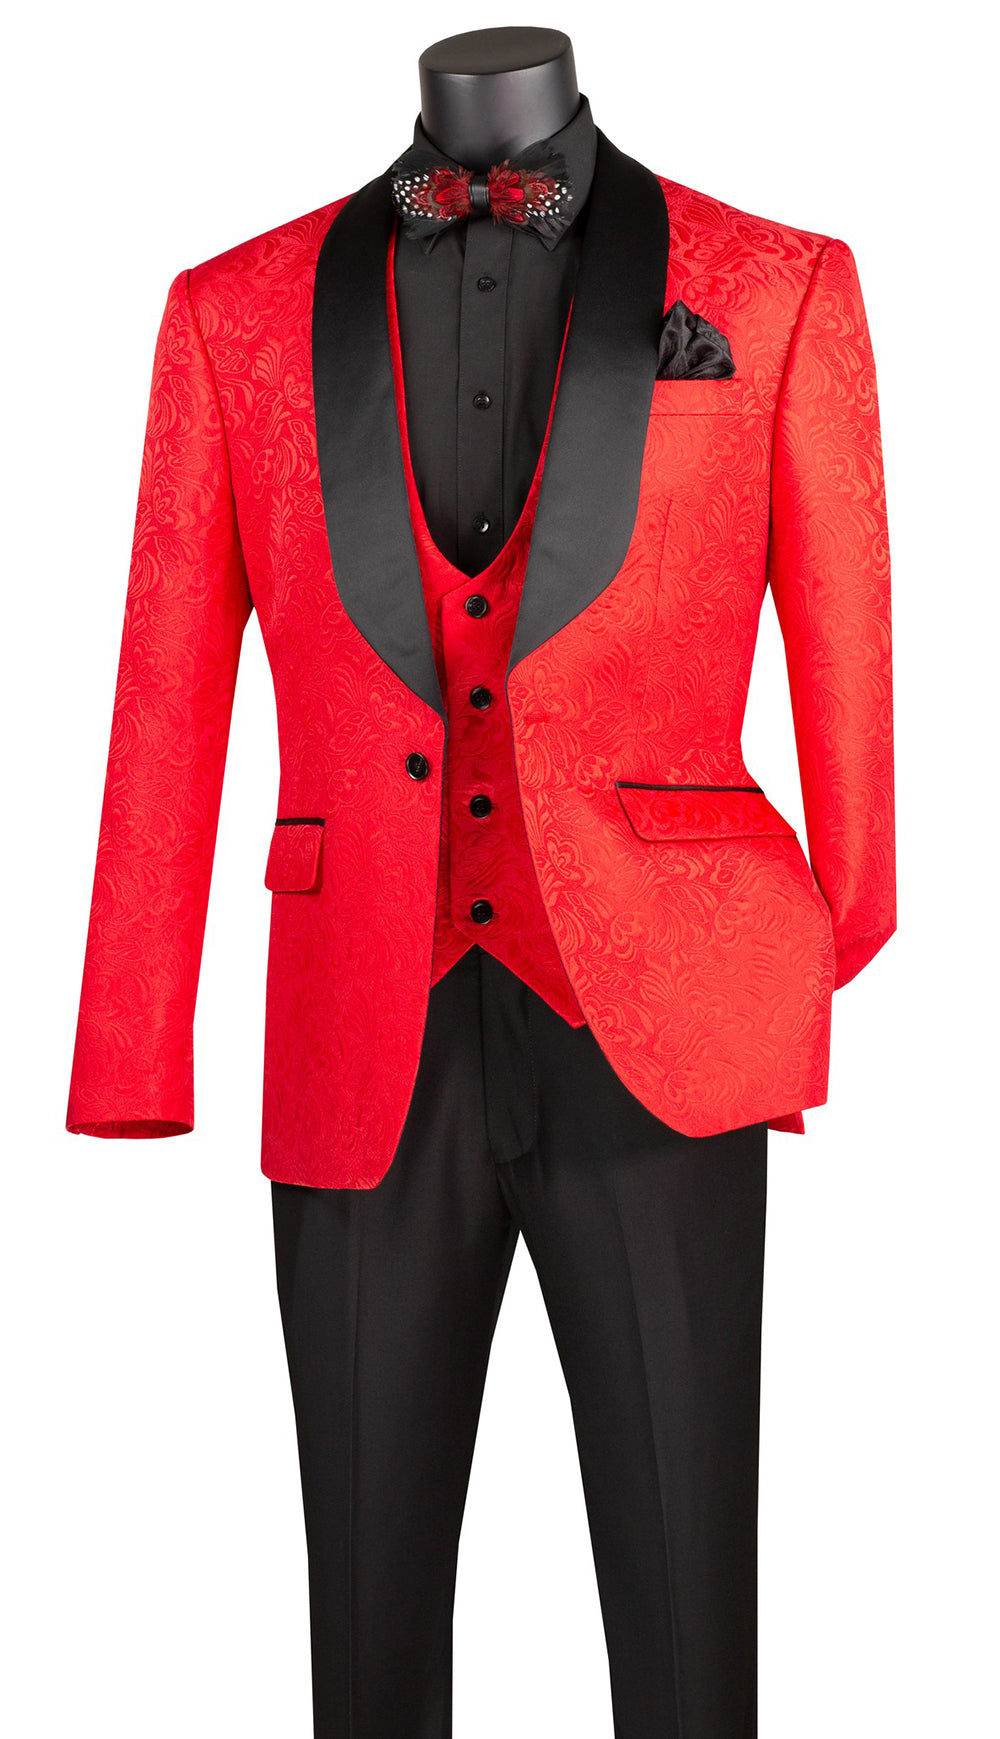 Vinci Tuxedo TVSJ-1-Red - Church Suits For Less